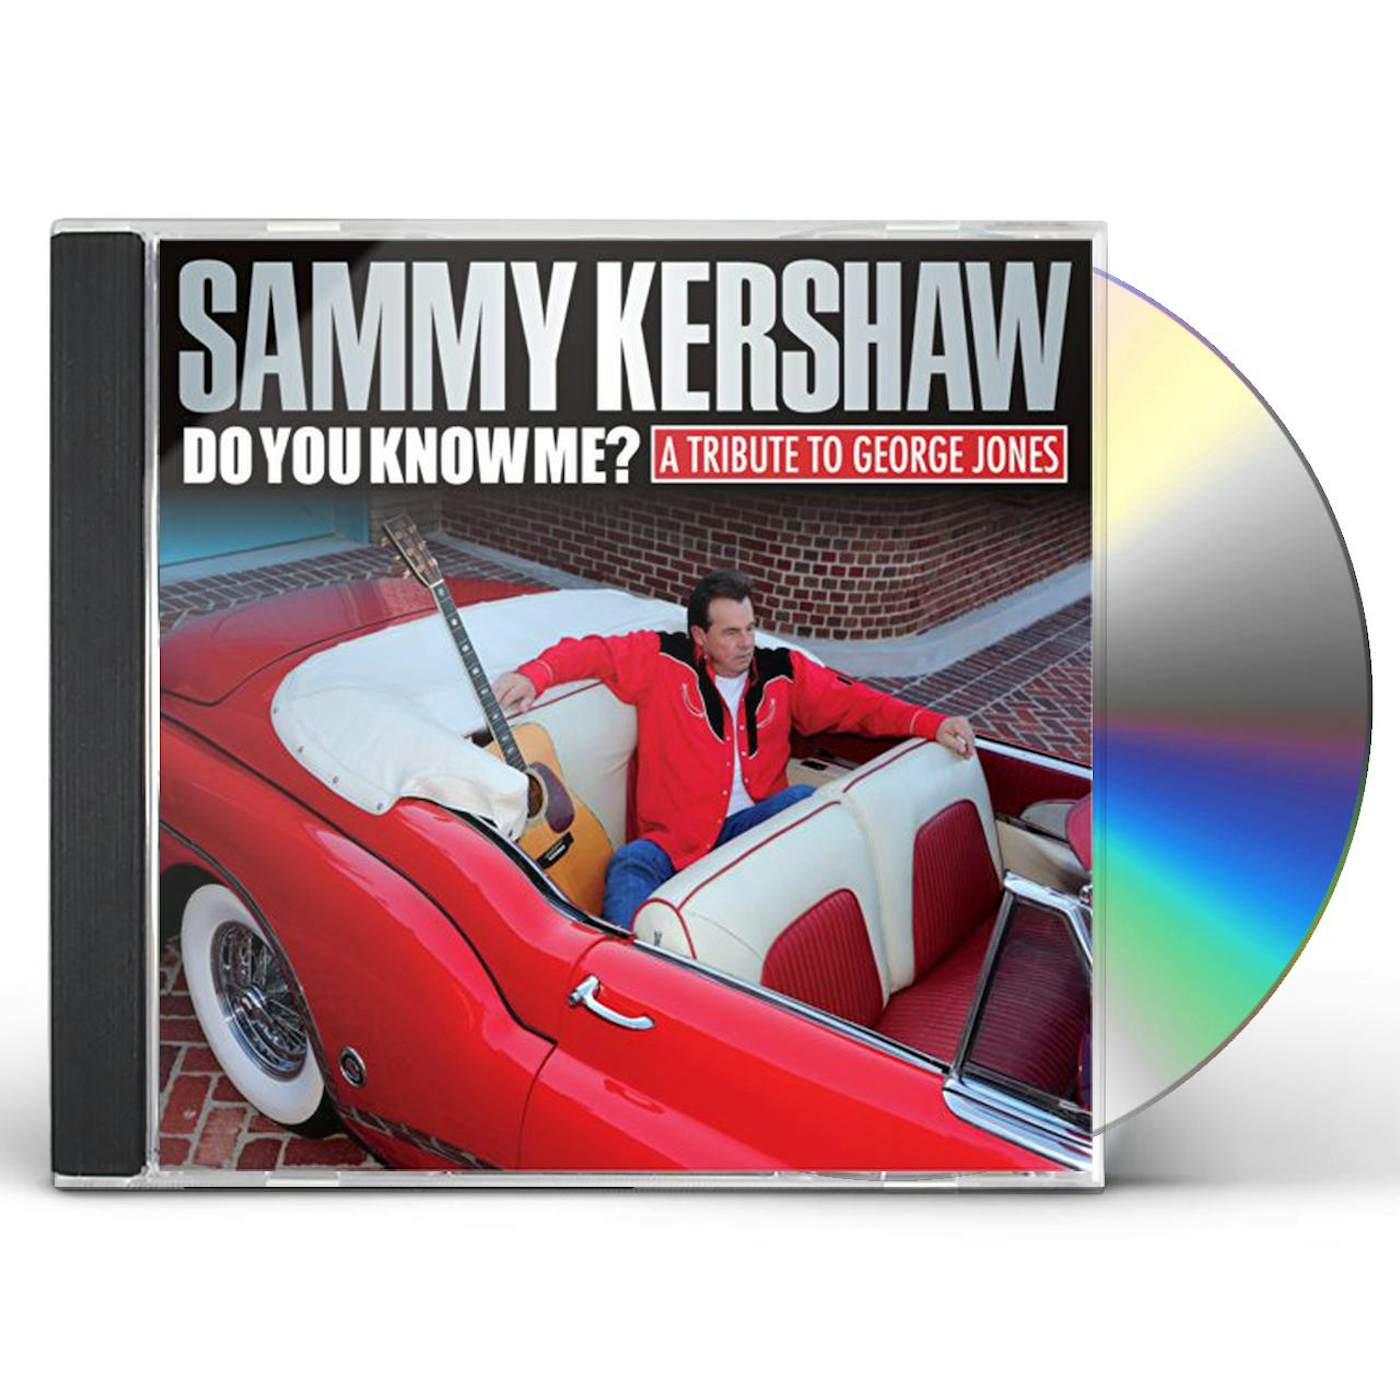 Sammy Kershaw DO YOU KNOW ME: A TRIBUTE TO GEORGE JONES CD